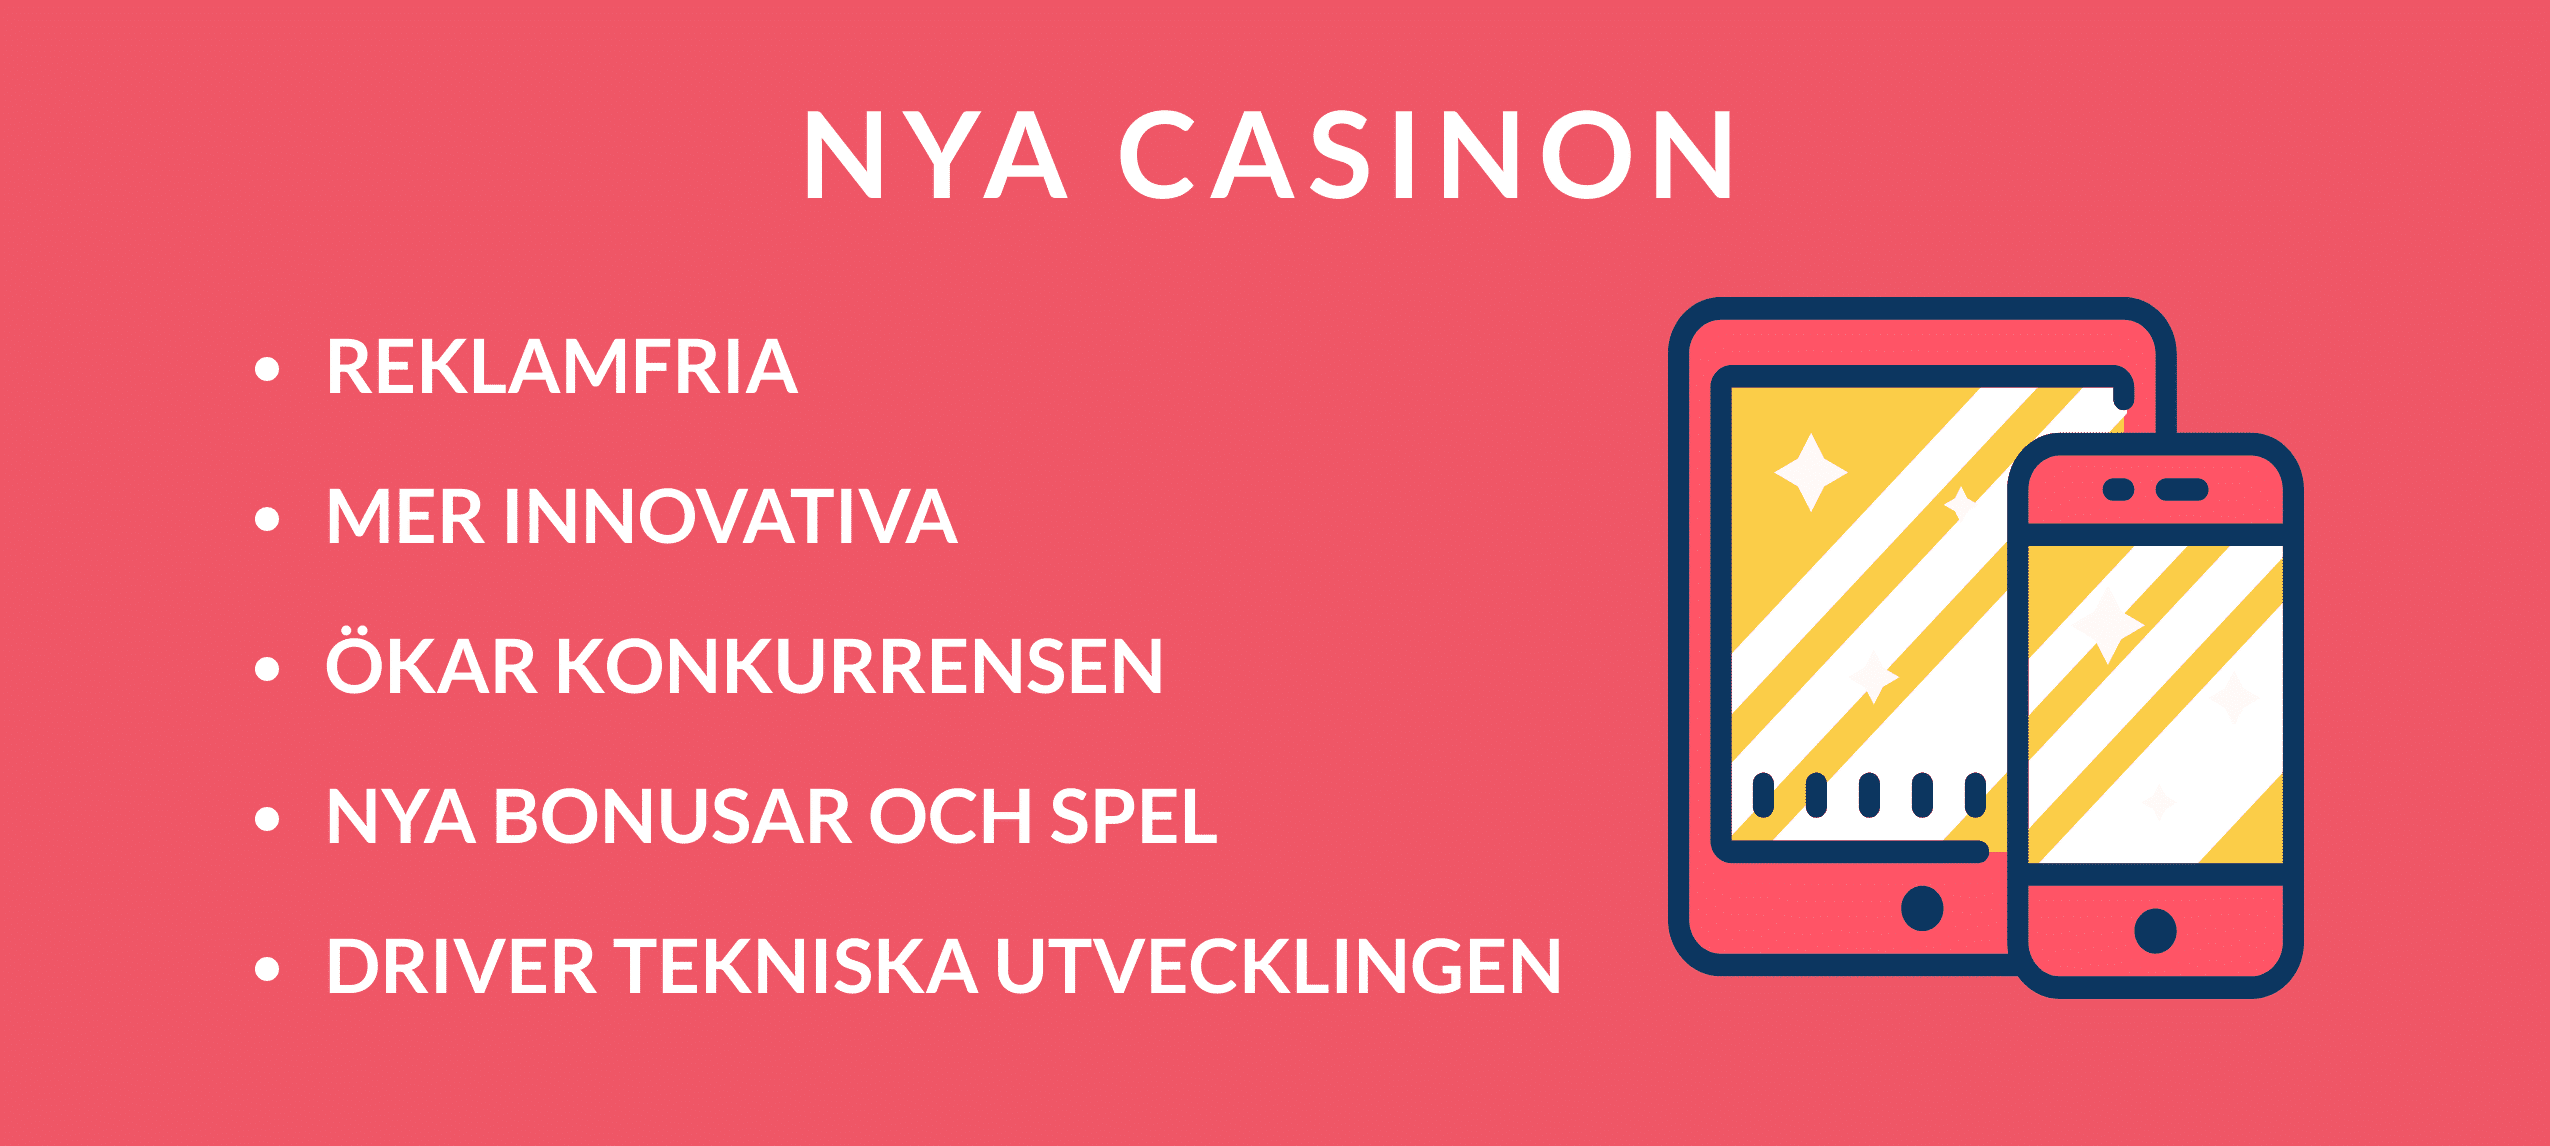 nya casinon infographic about casivo se